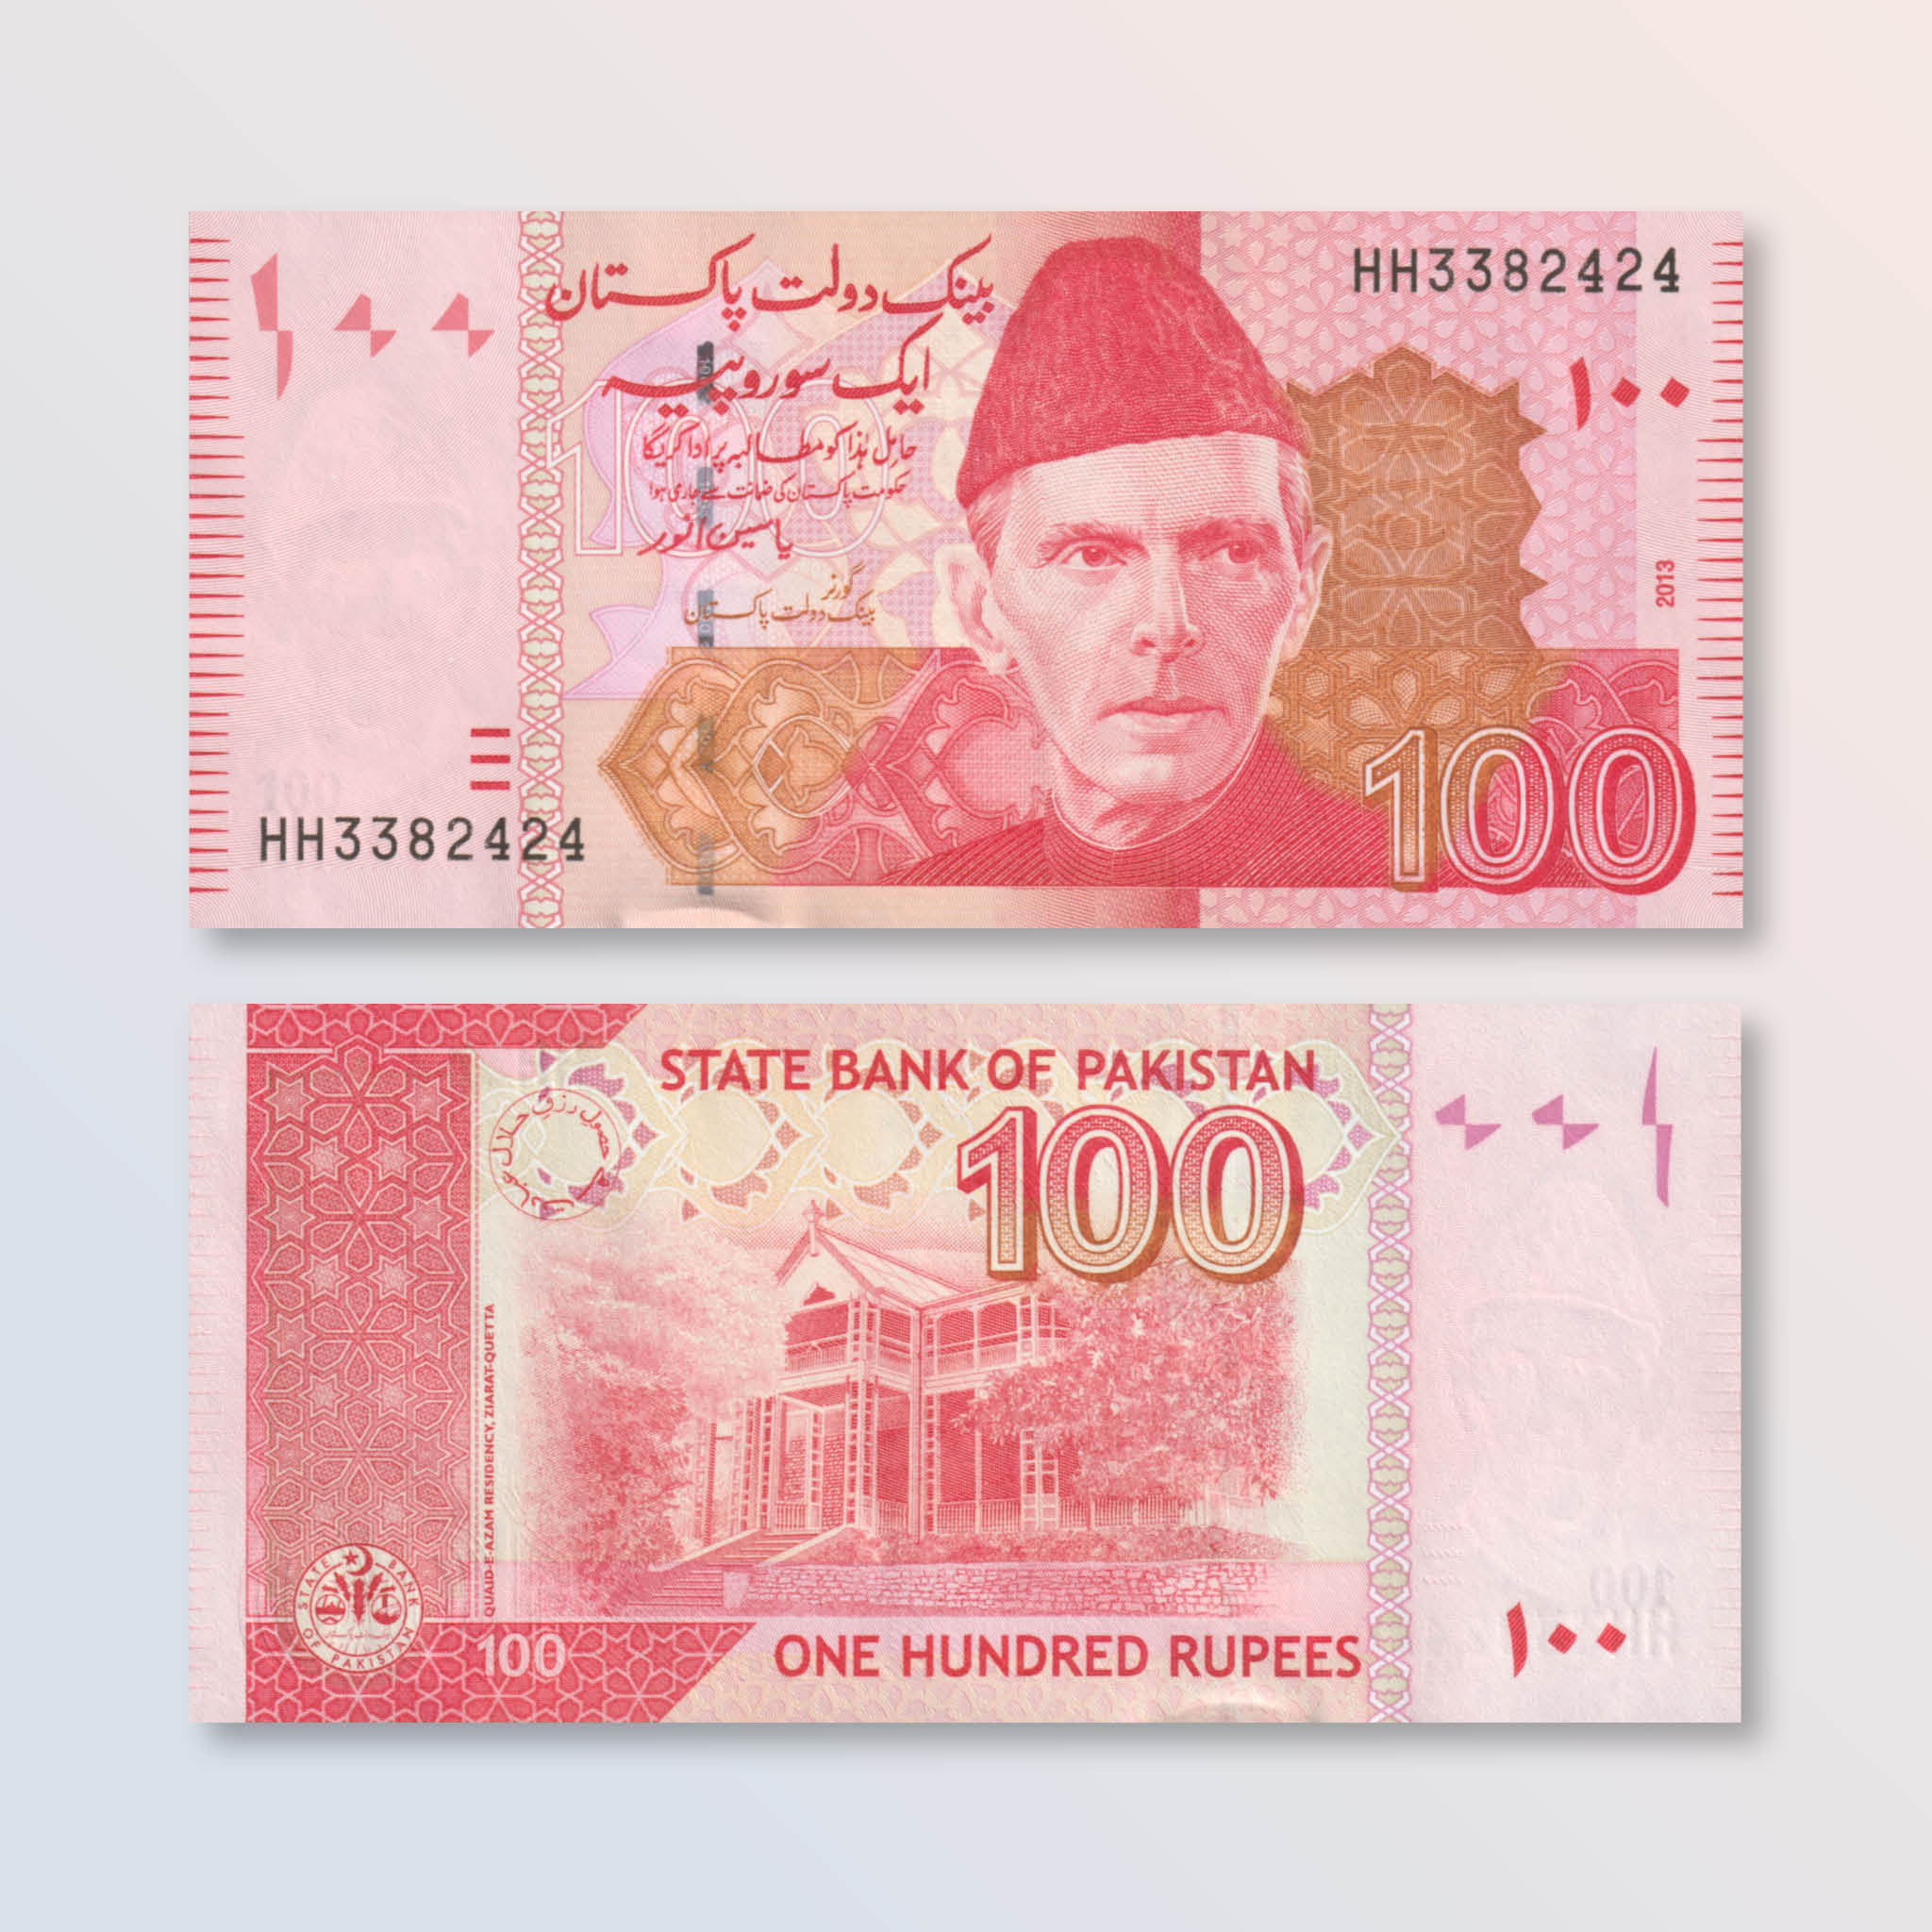 Pakistan 100 Rupees, 2013, B235j, P48h, UNC - Robert's World Money - World Banknotes